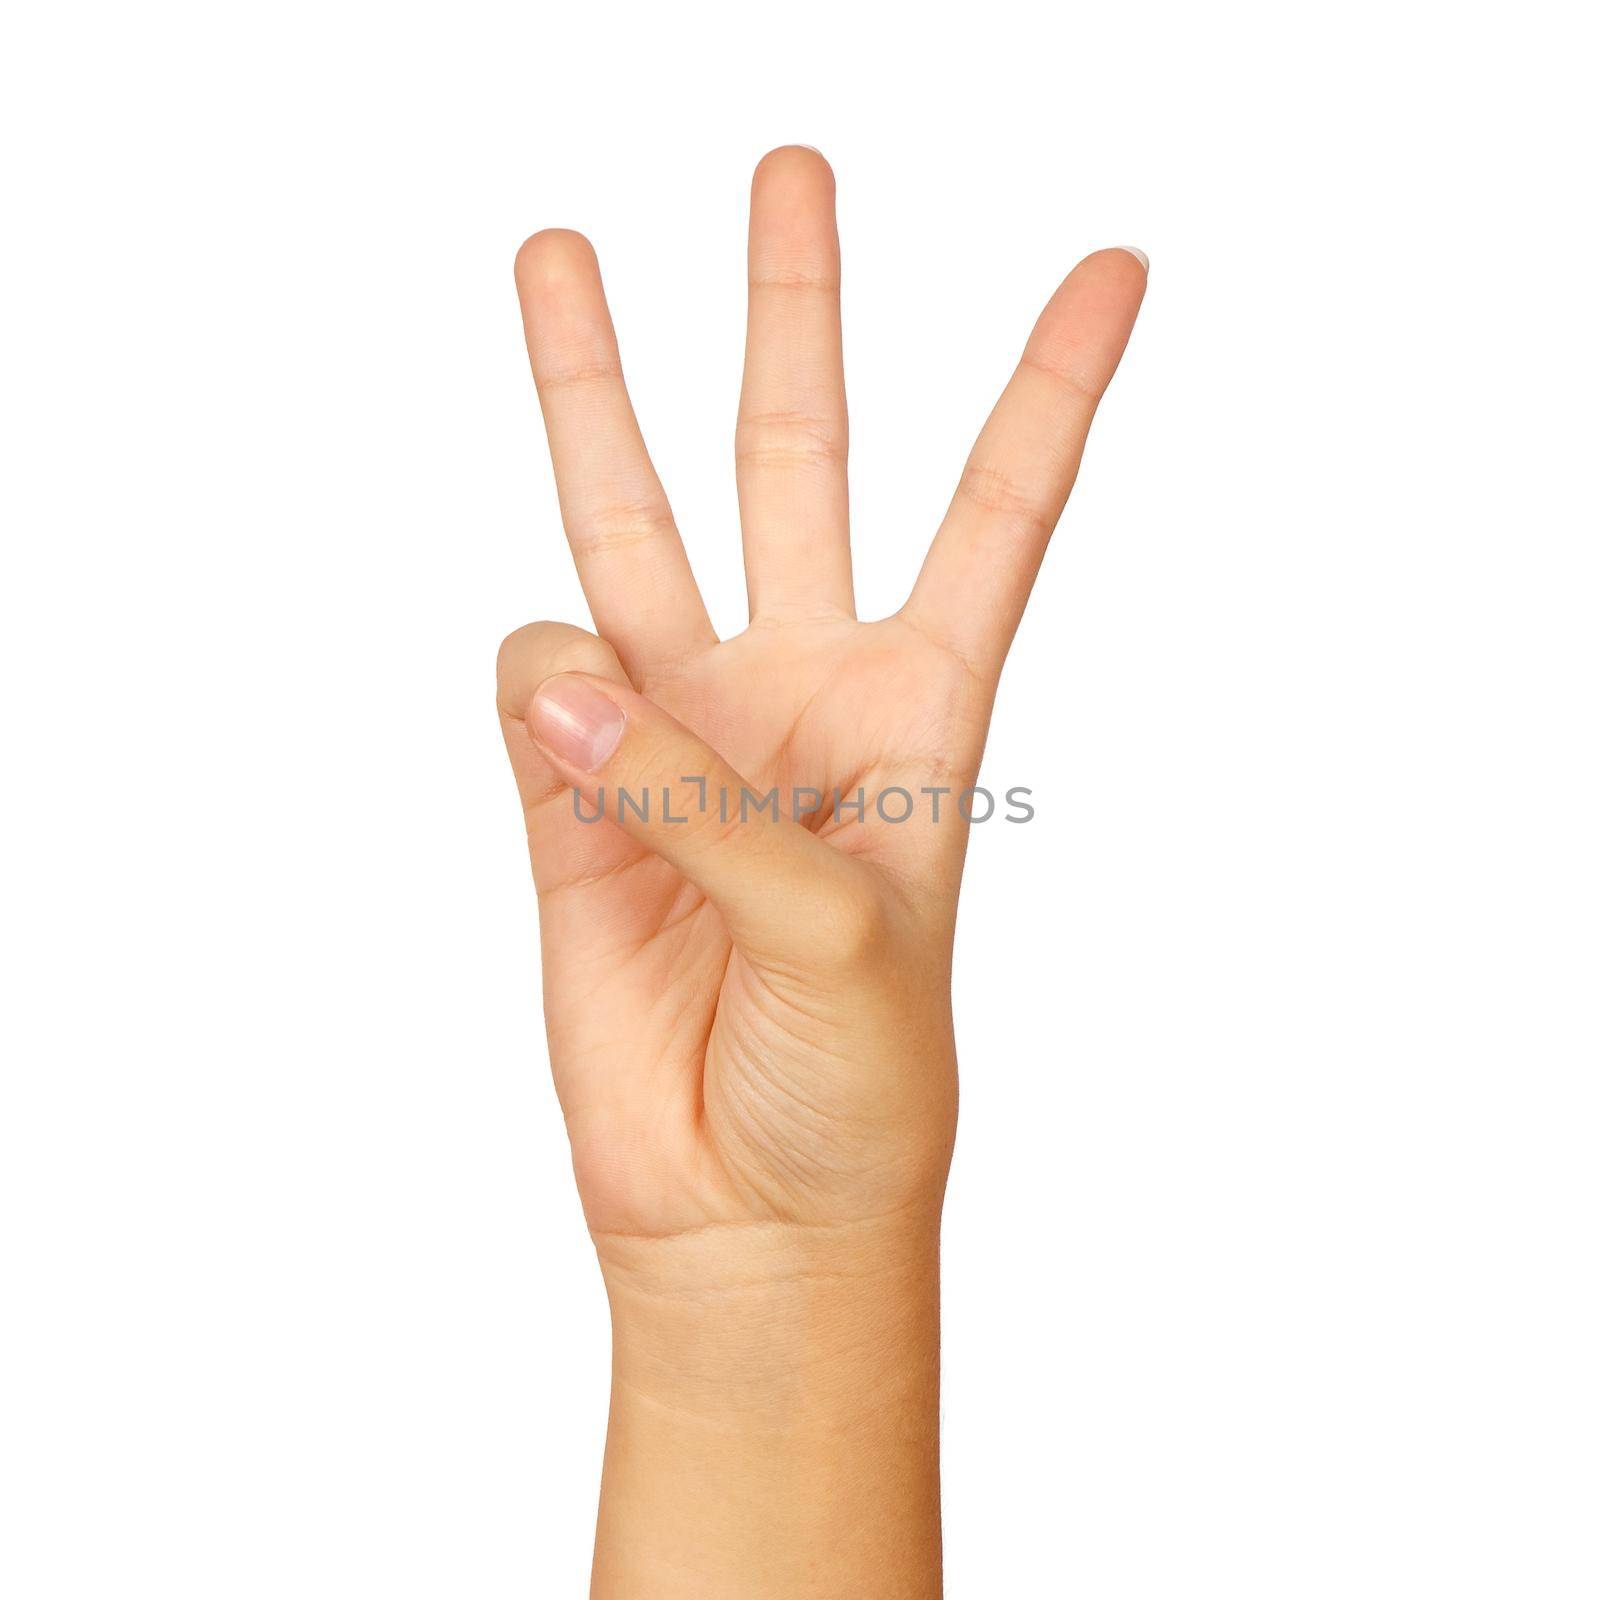 american sign language number 6 by raddnatt